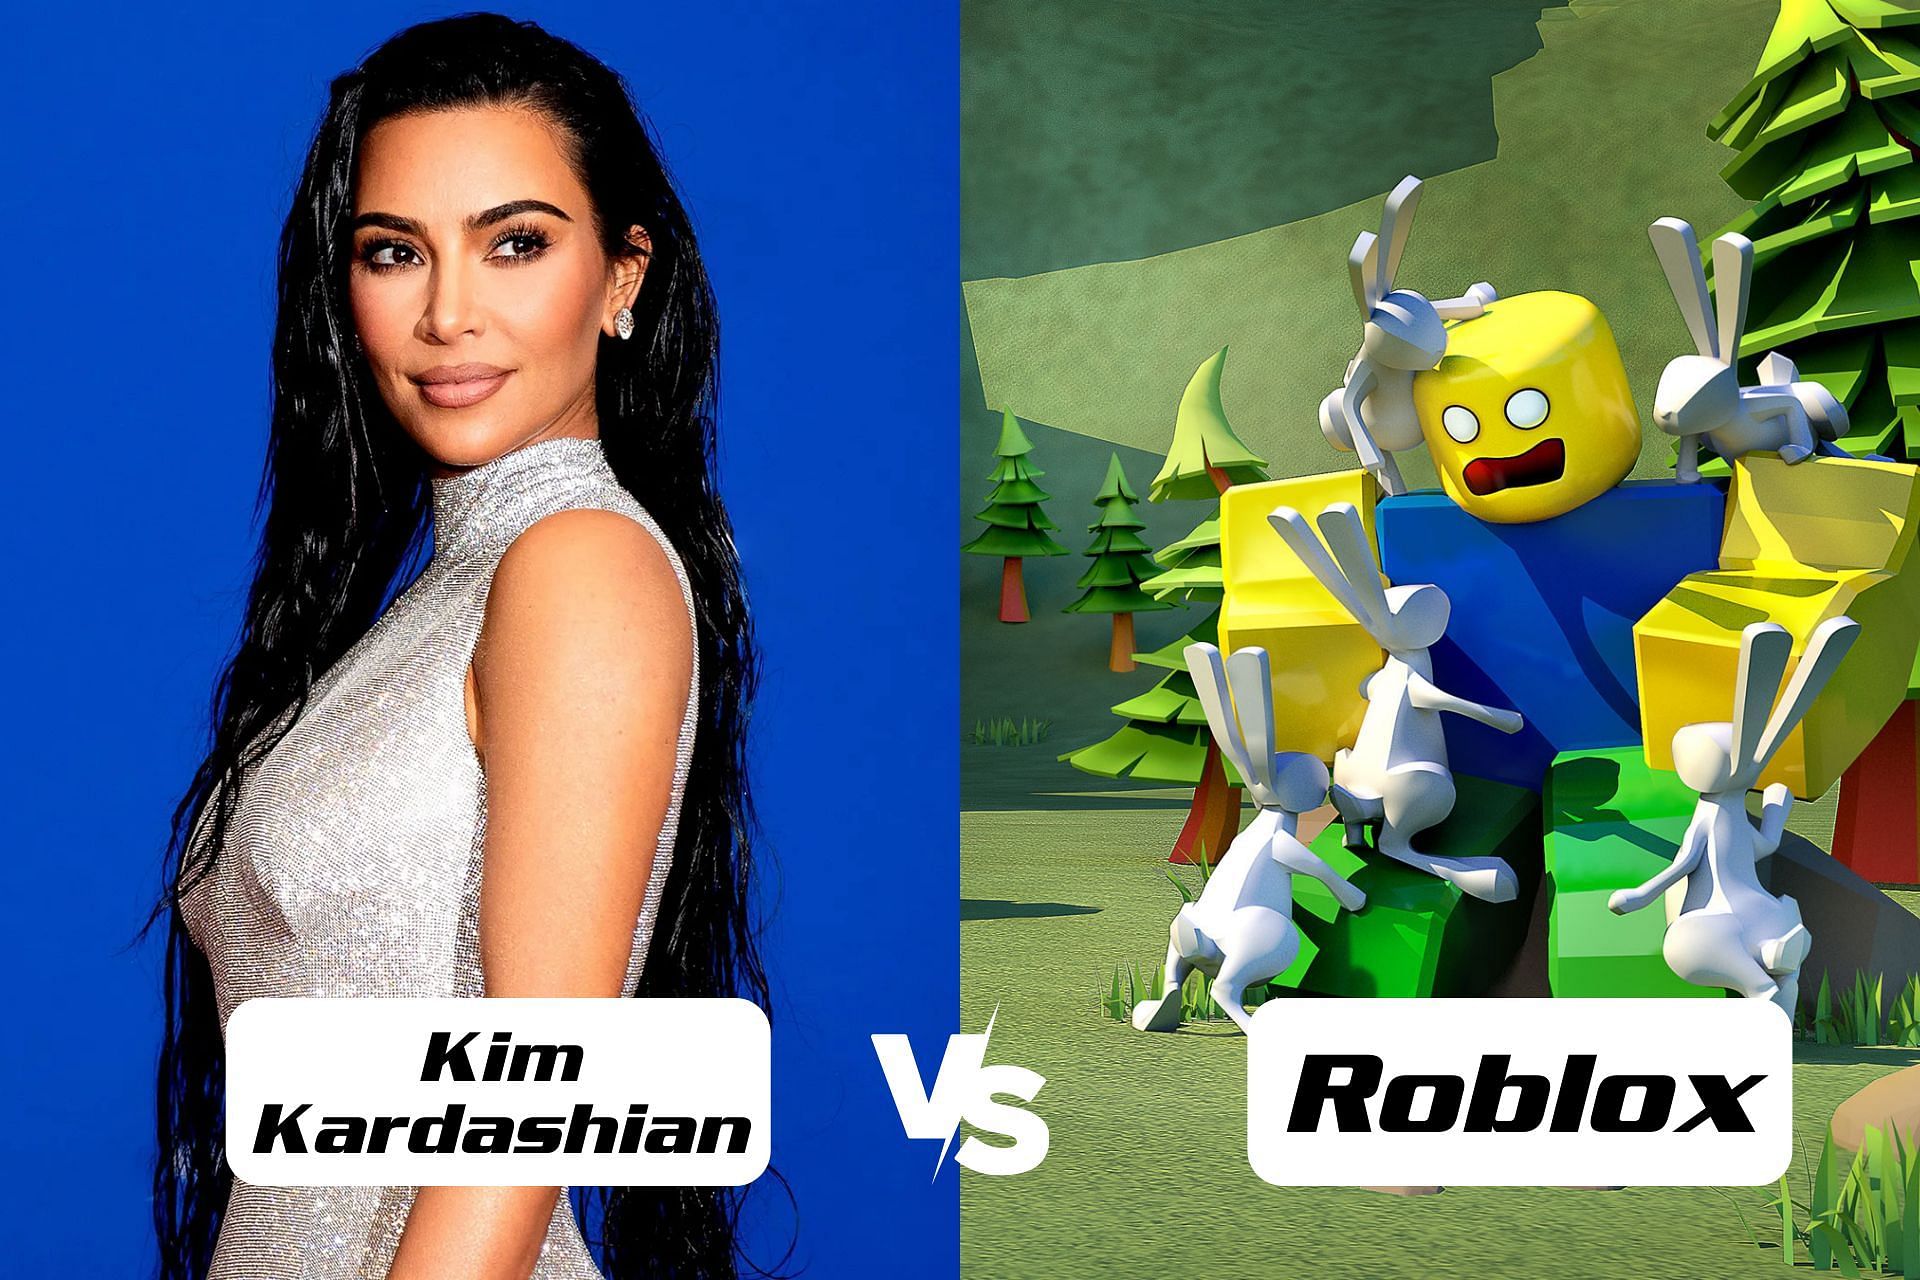 Why did Kim Kardashian threaten to sue Roblox?